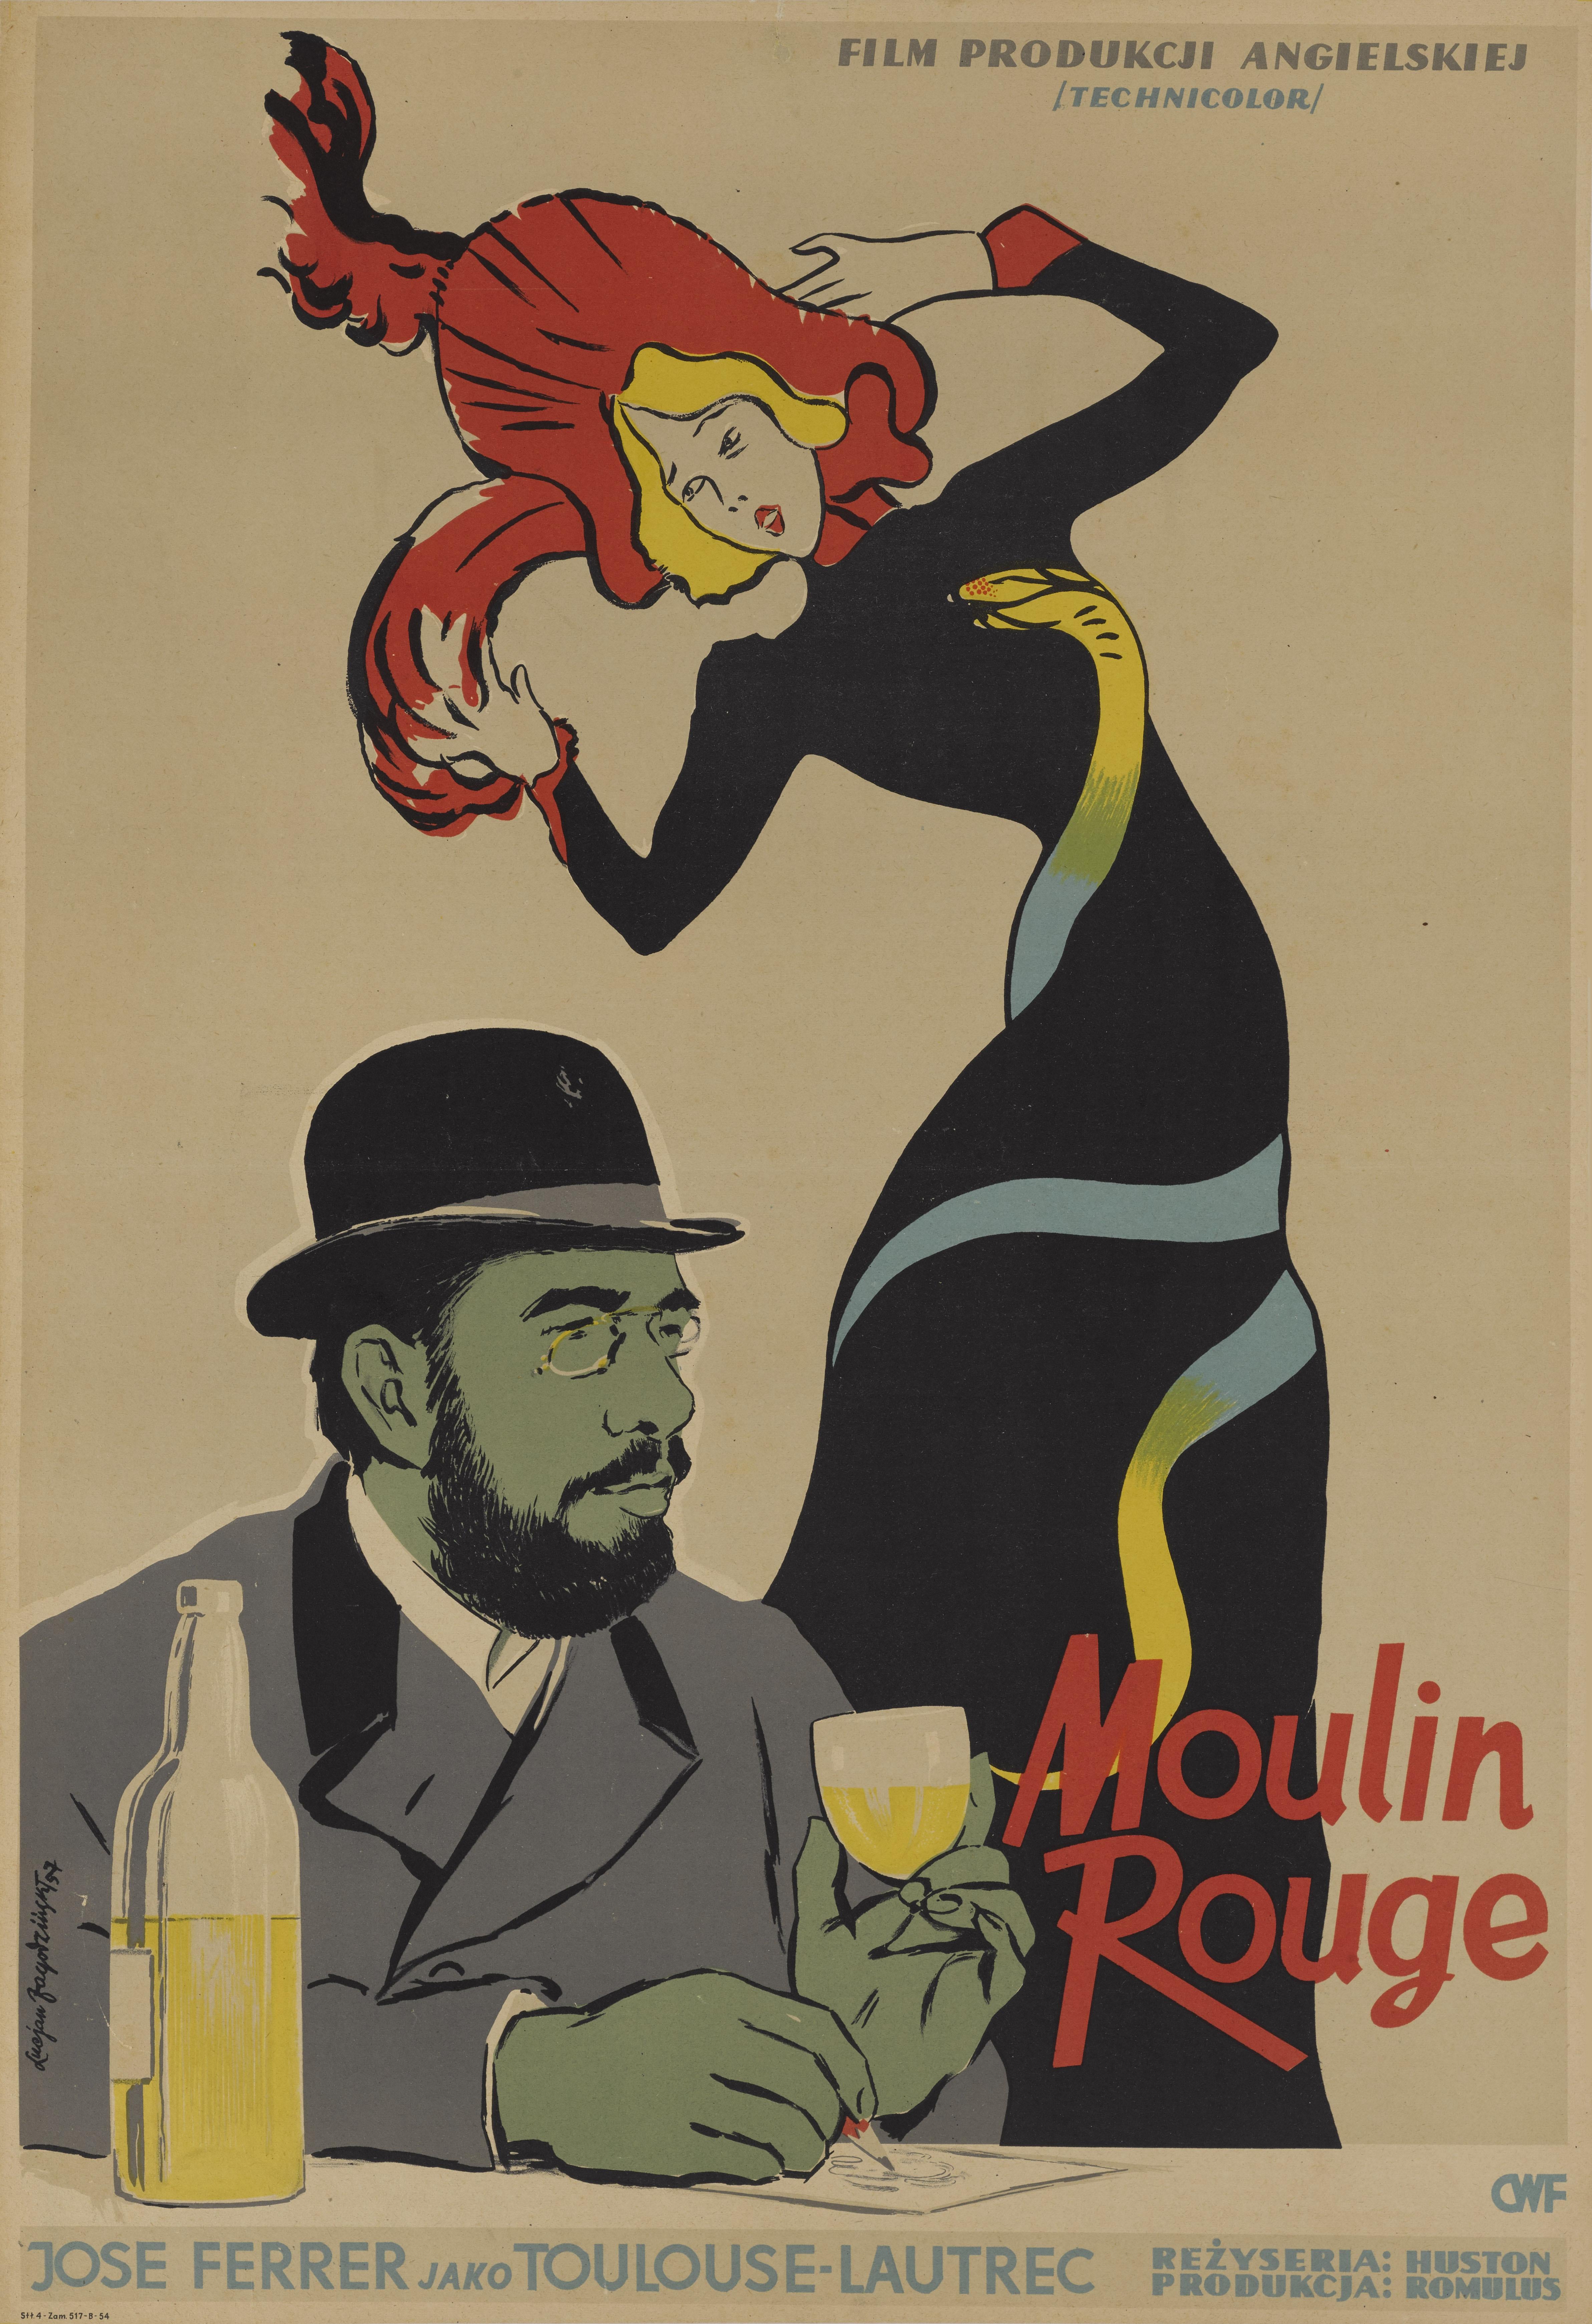 Polish Moulin Rouge